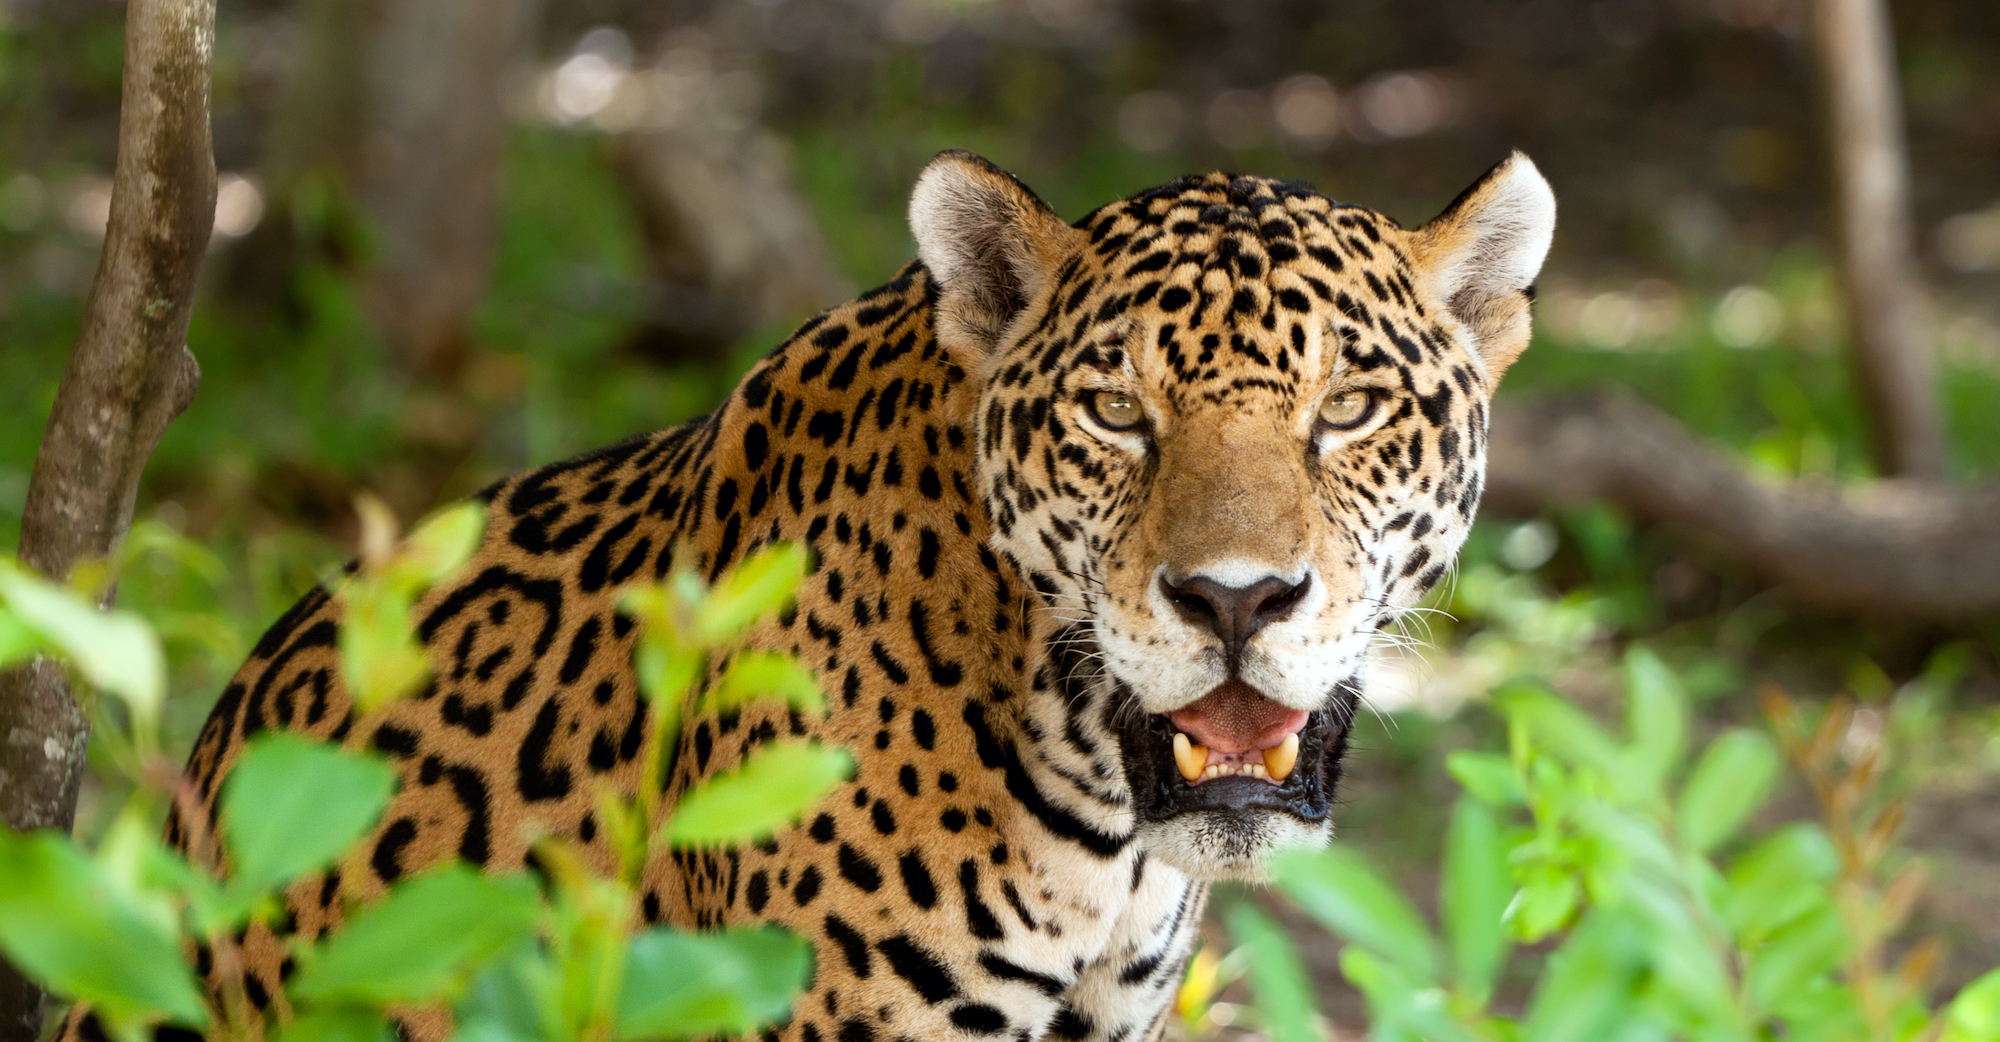 Peru travel guide: Amazon Jungle wildlife